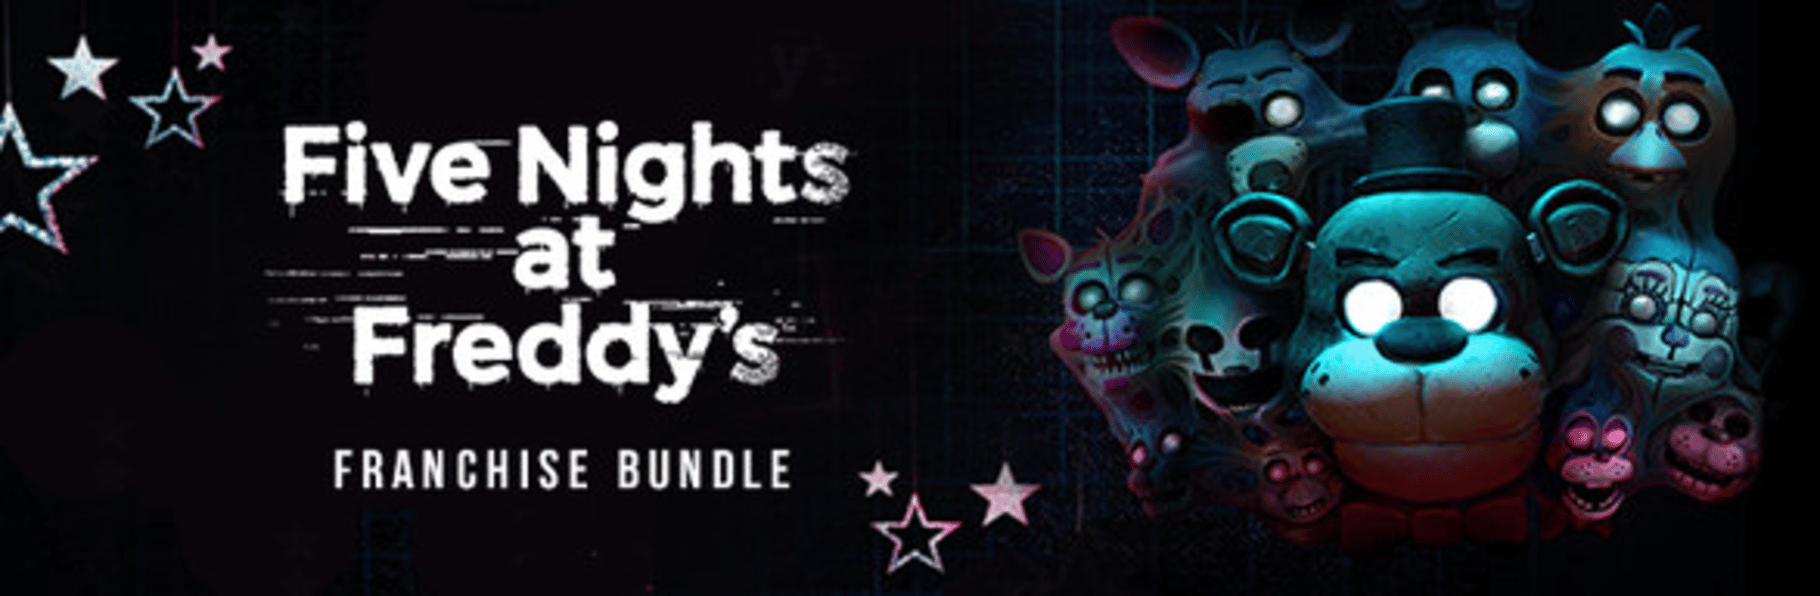 Five Nights at Freddy's Franchise Bundle screenshot